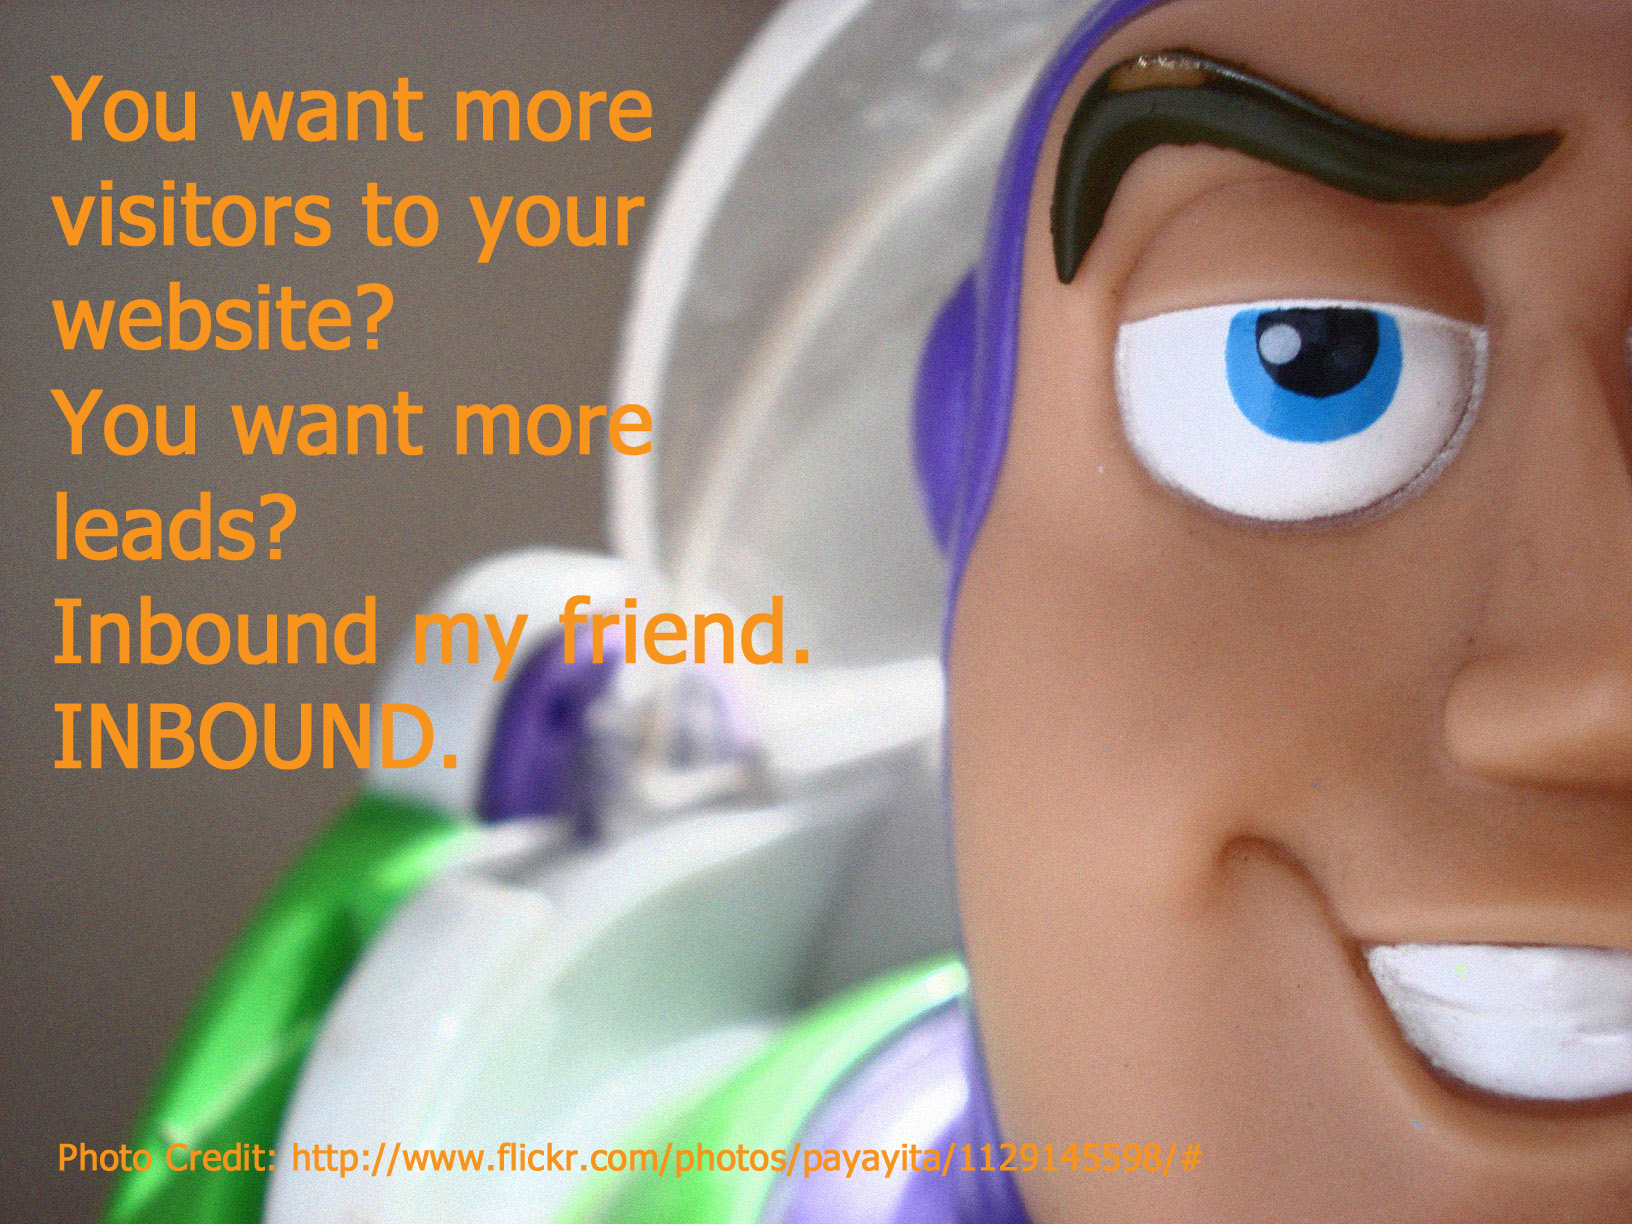 What Buzz Lightyear says about Inbound Marketing